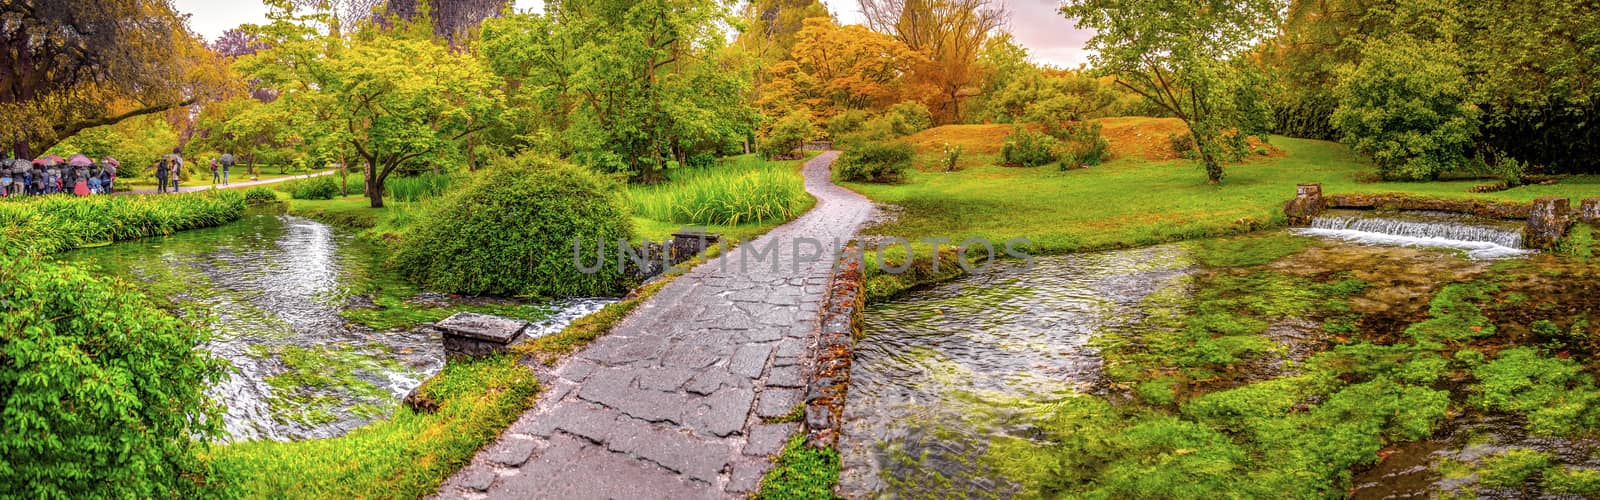 enchanted eden garden path bridge trail over pond in horizontal panoramic garden by LucaLorenzelli